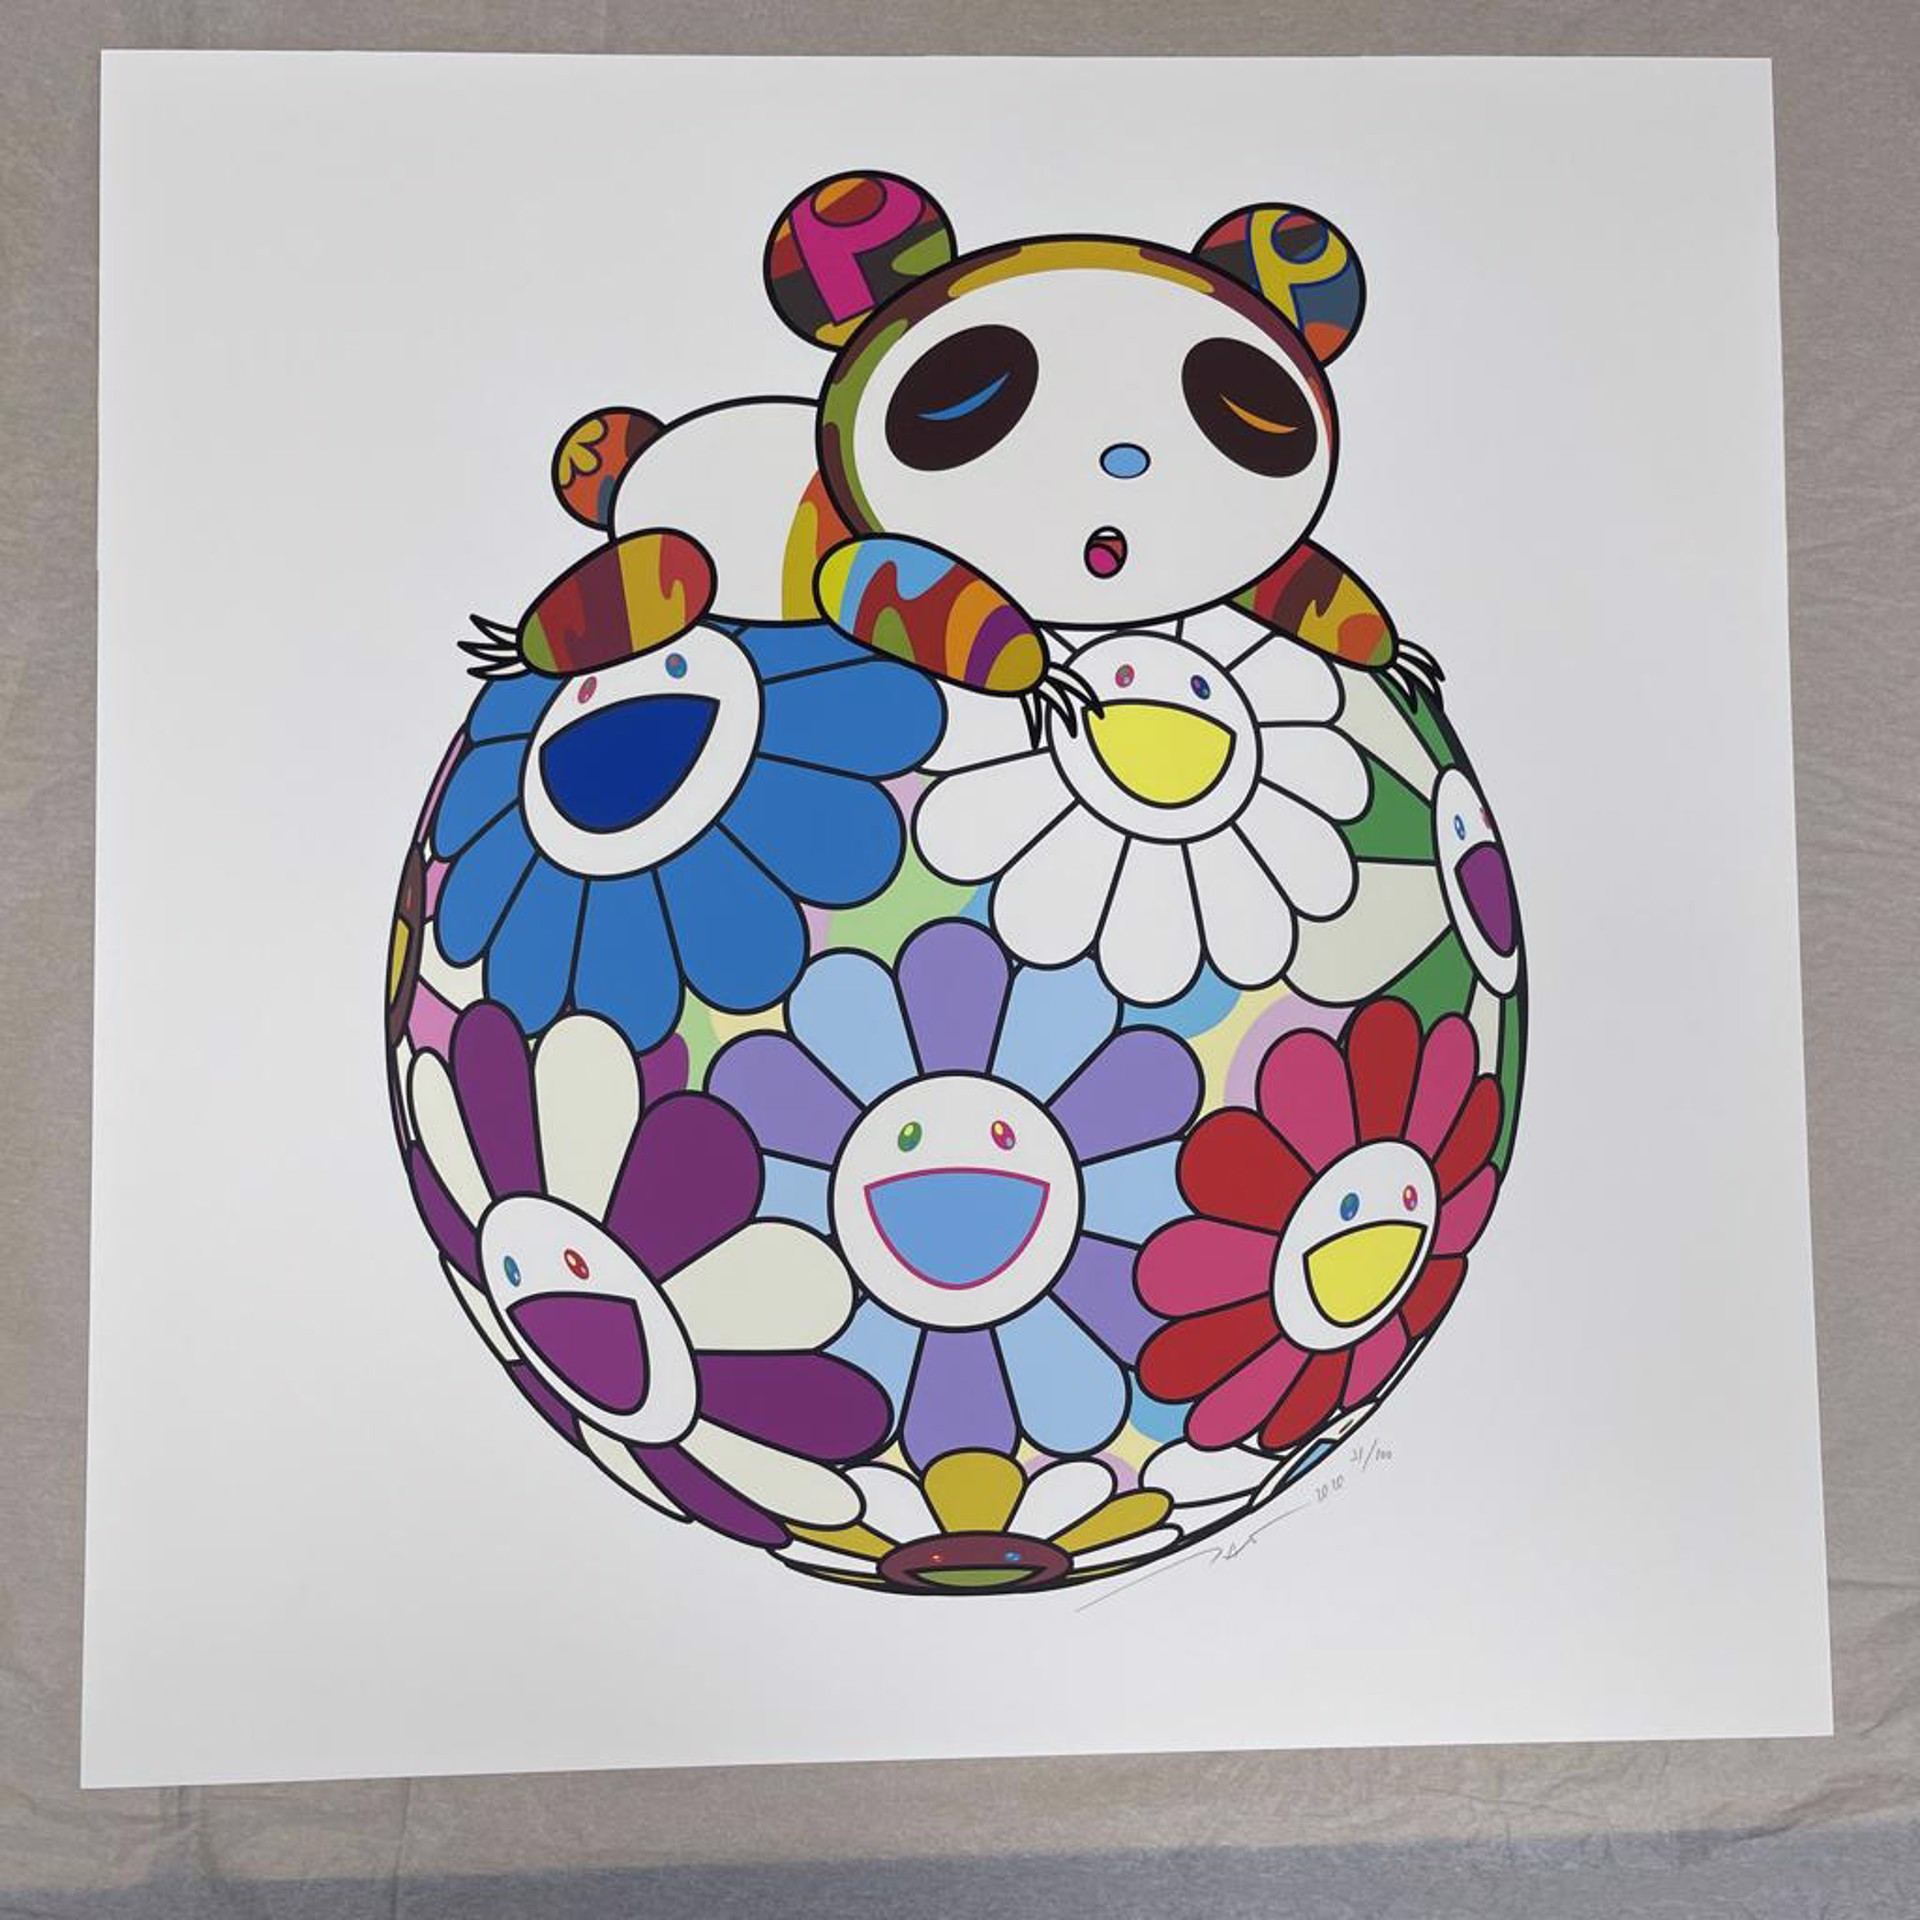 Atop a Ball of Flowers, A Panda Cub Sleeps Soundly by Takashi Murakami